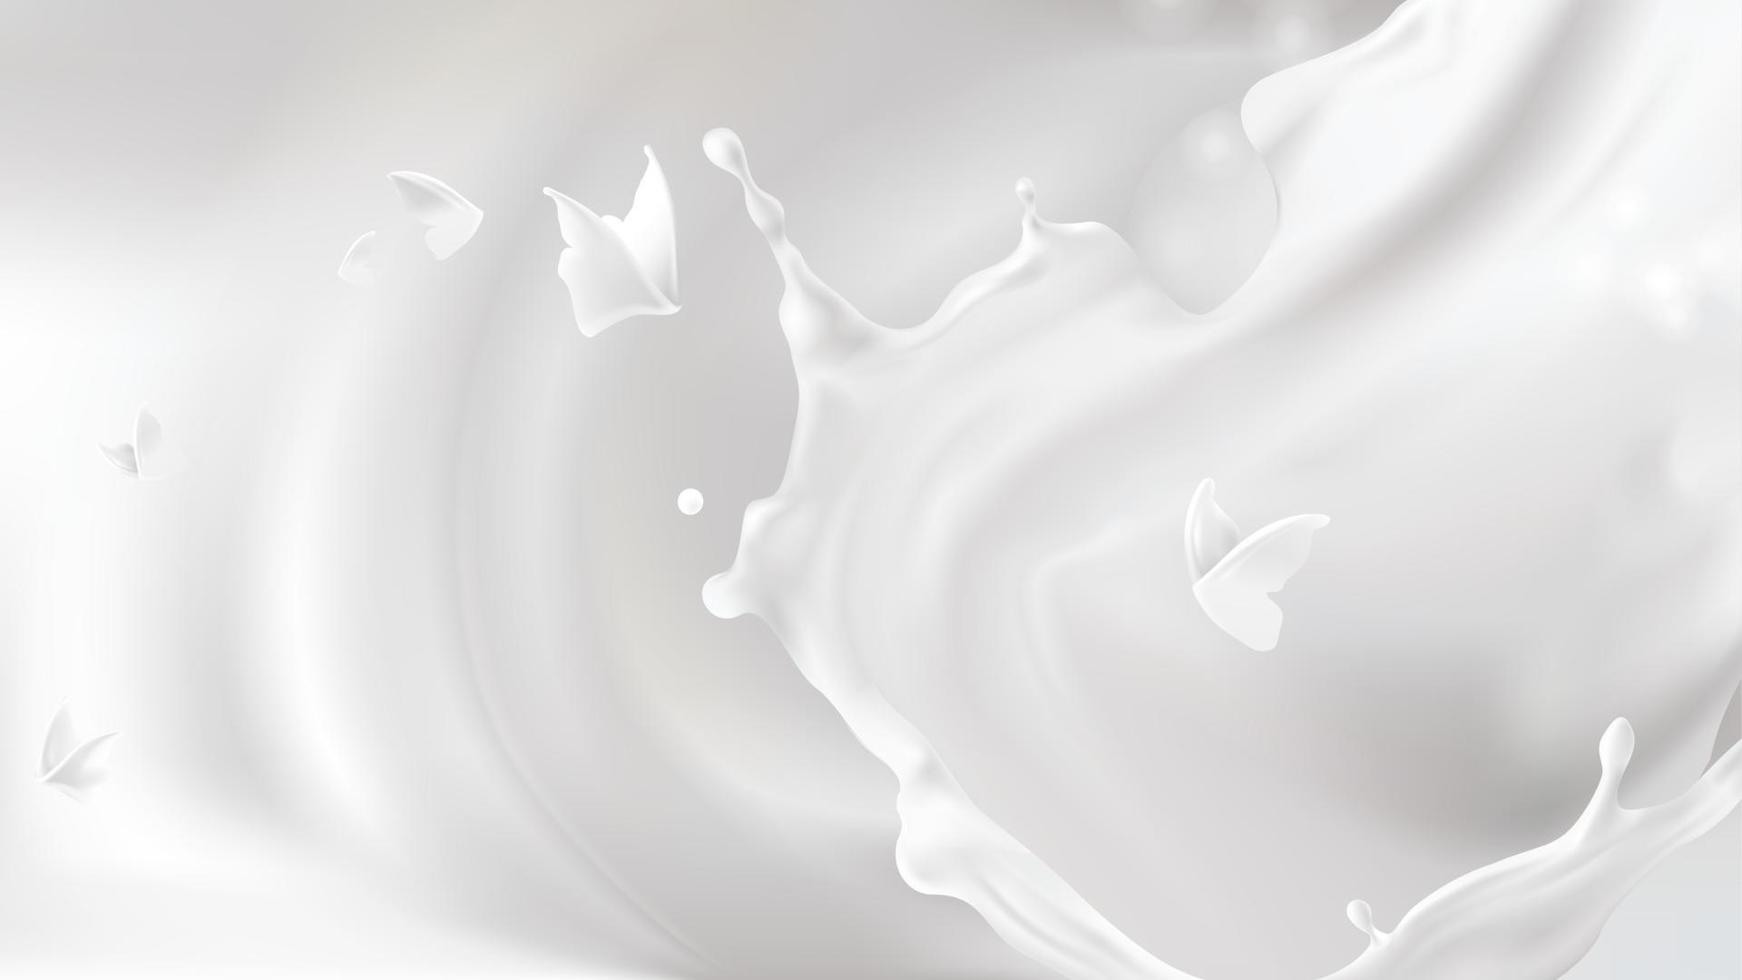 Milk splash, swirl shape and butterfly silhouettes vector